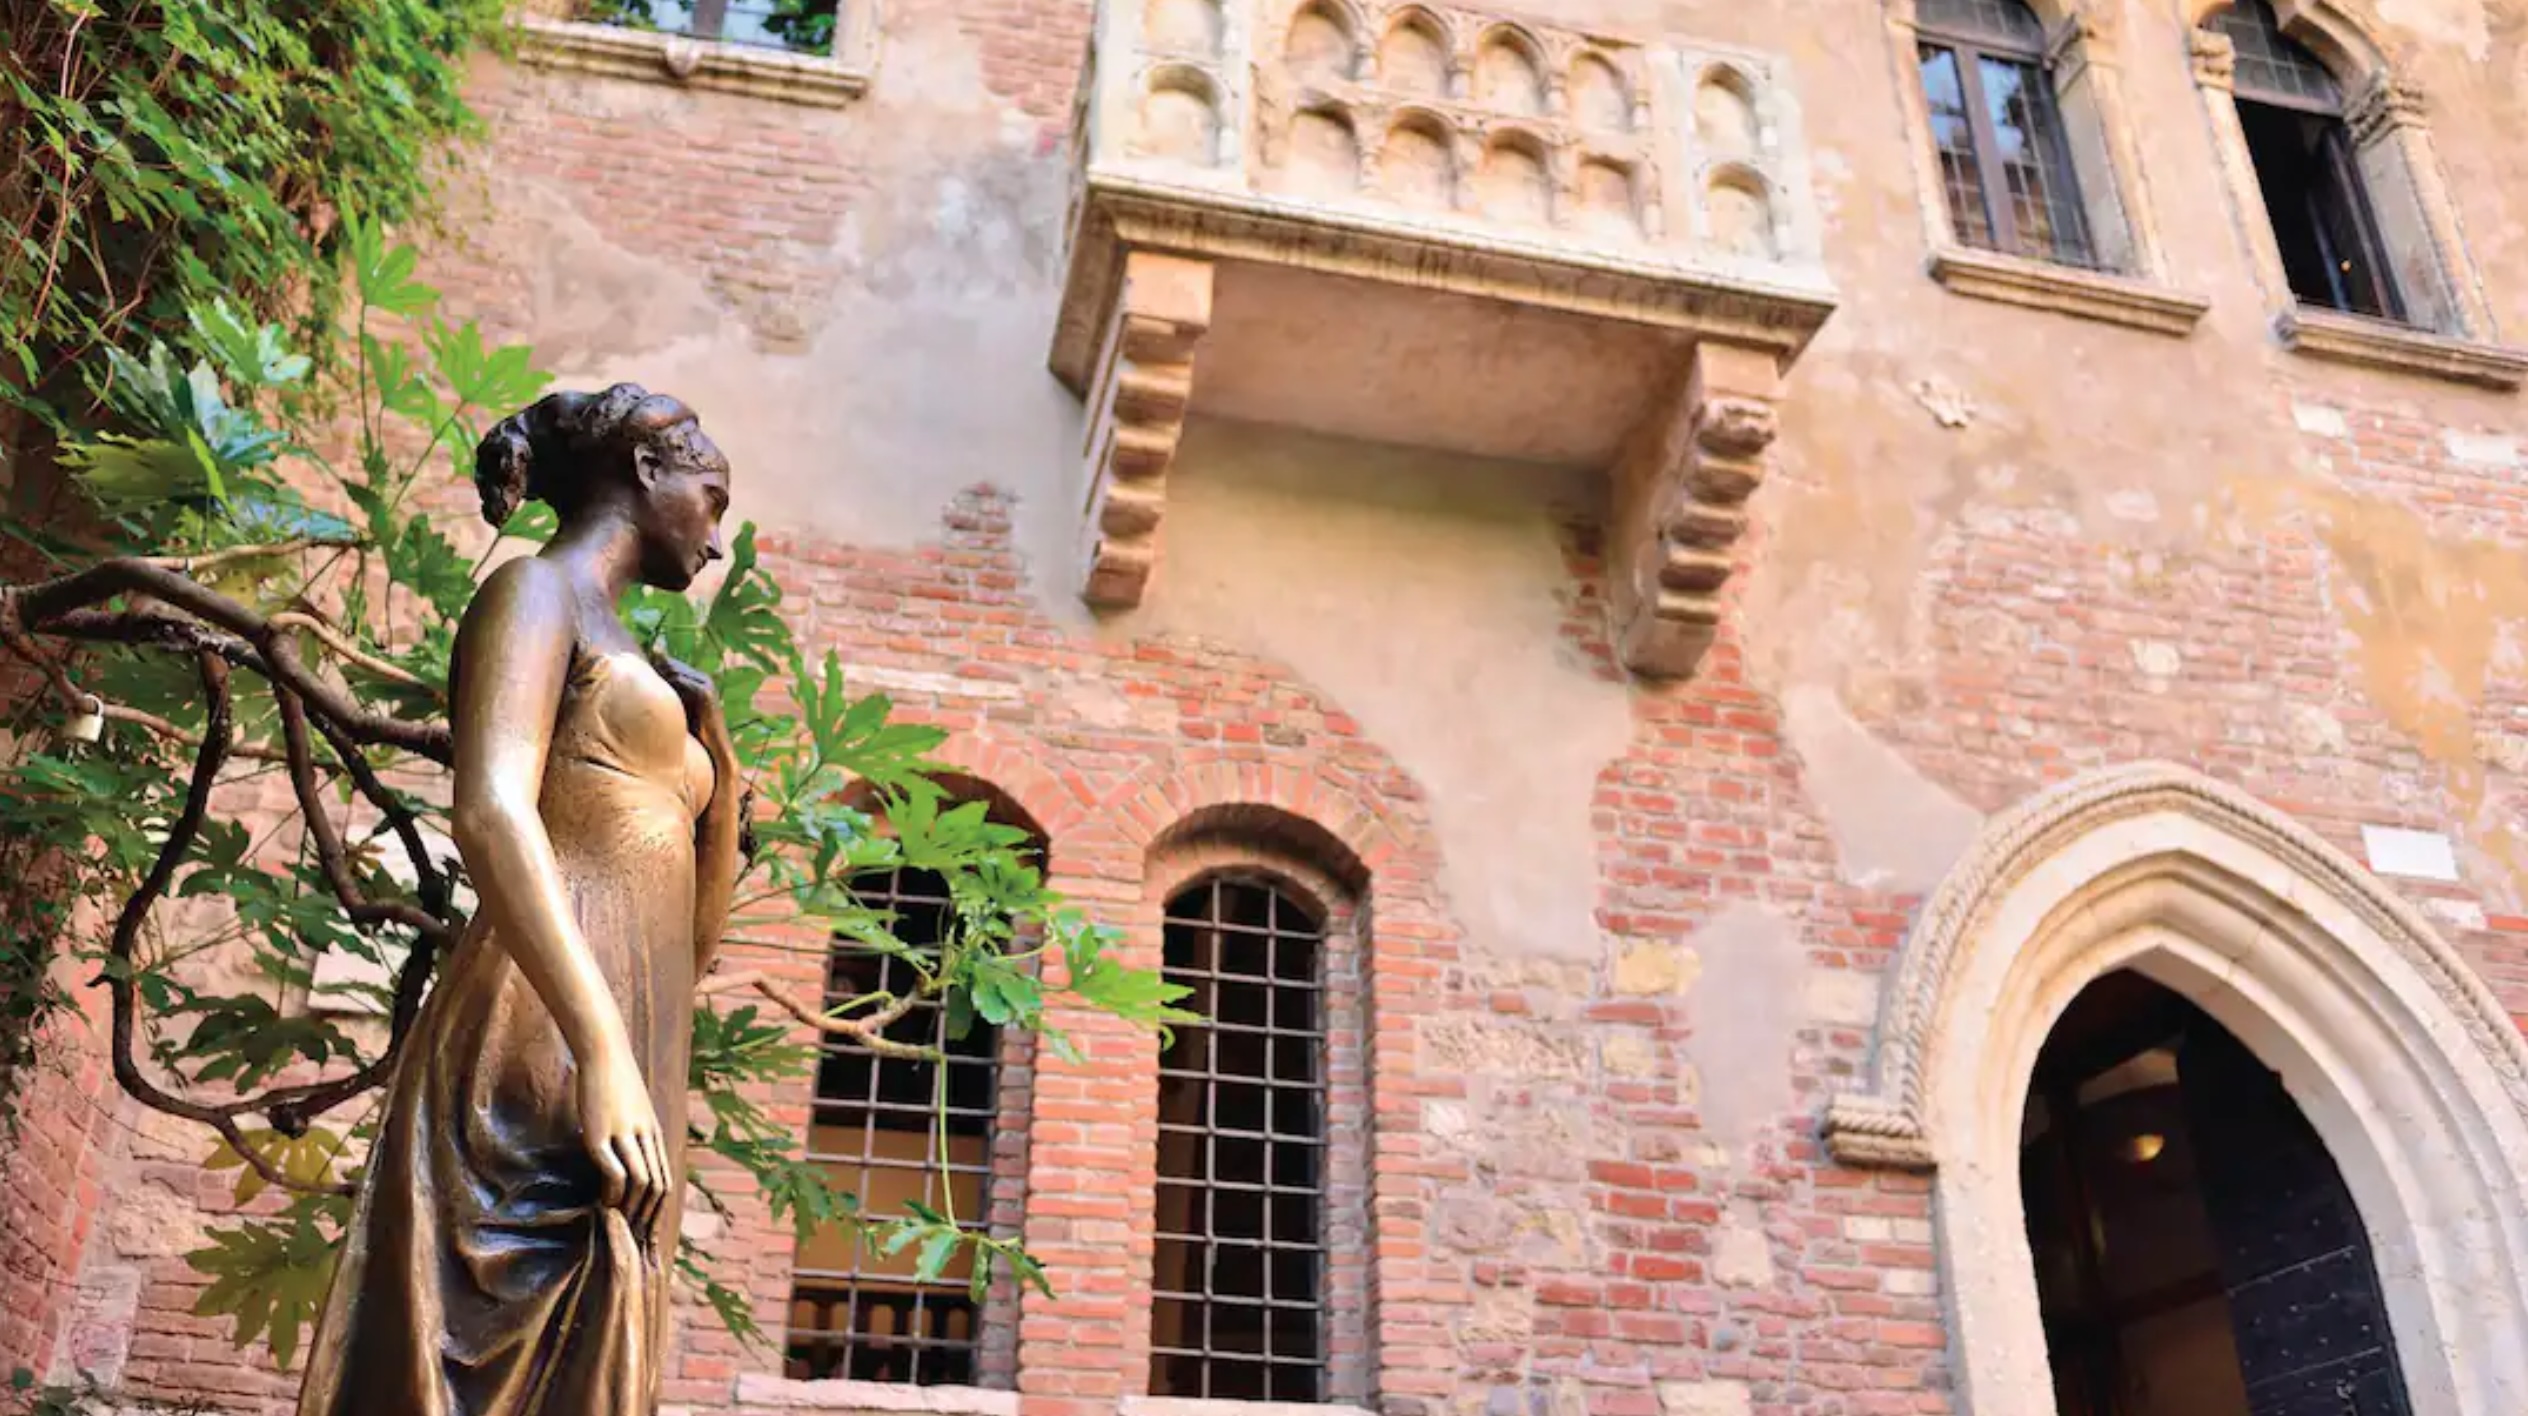 Romeo & Juliette balcony, Verona